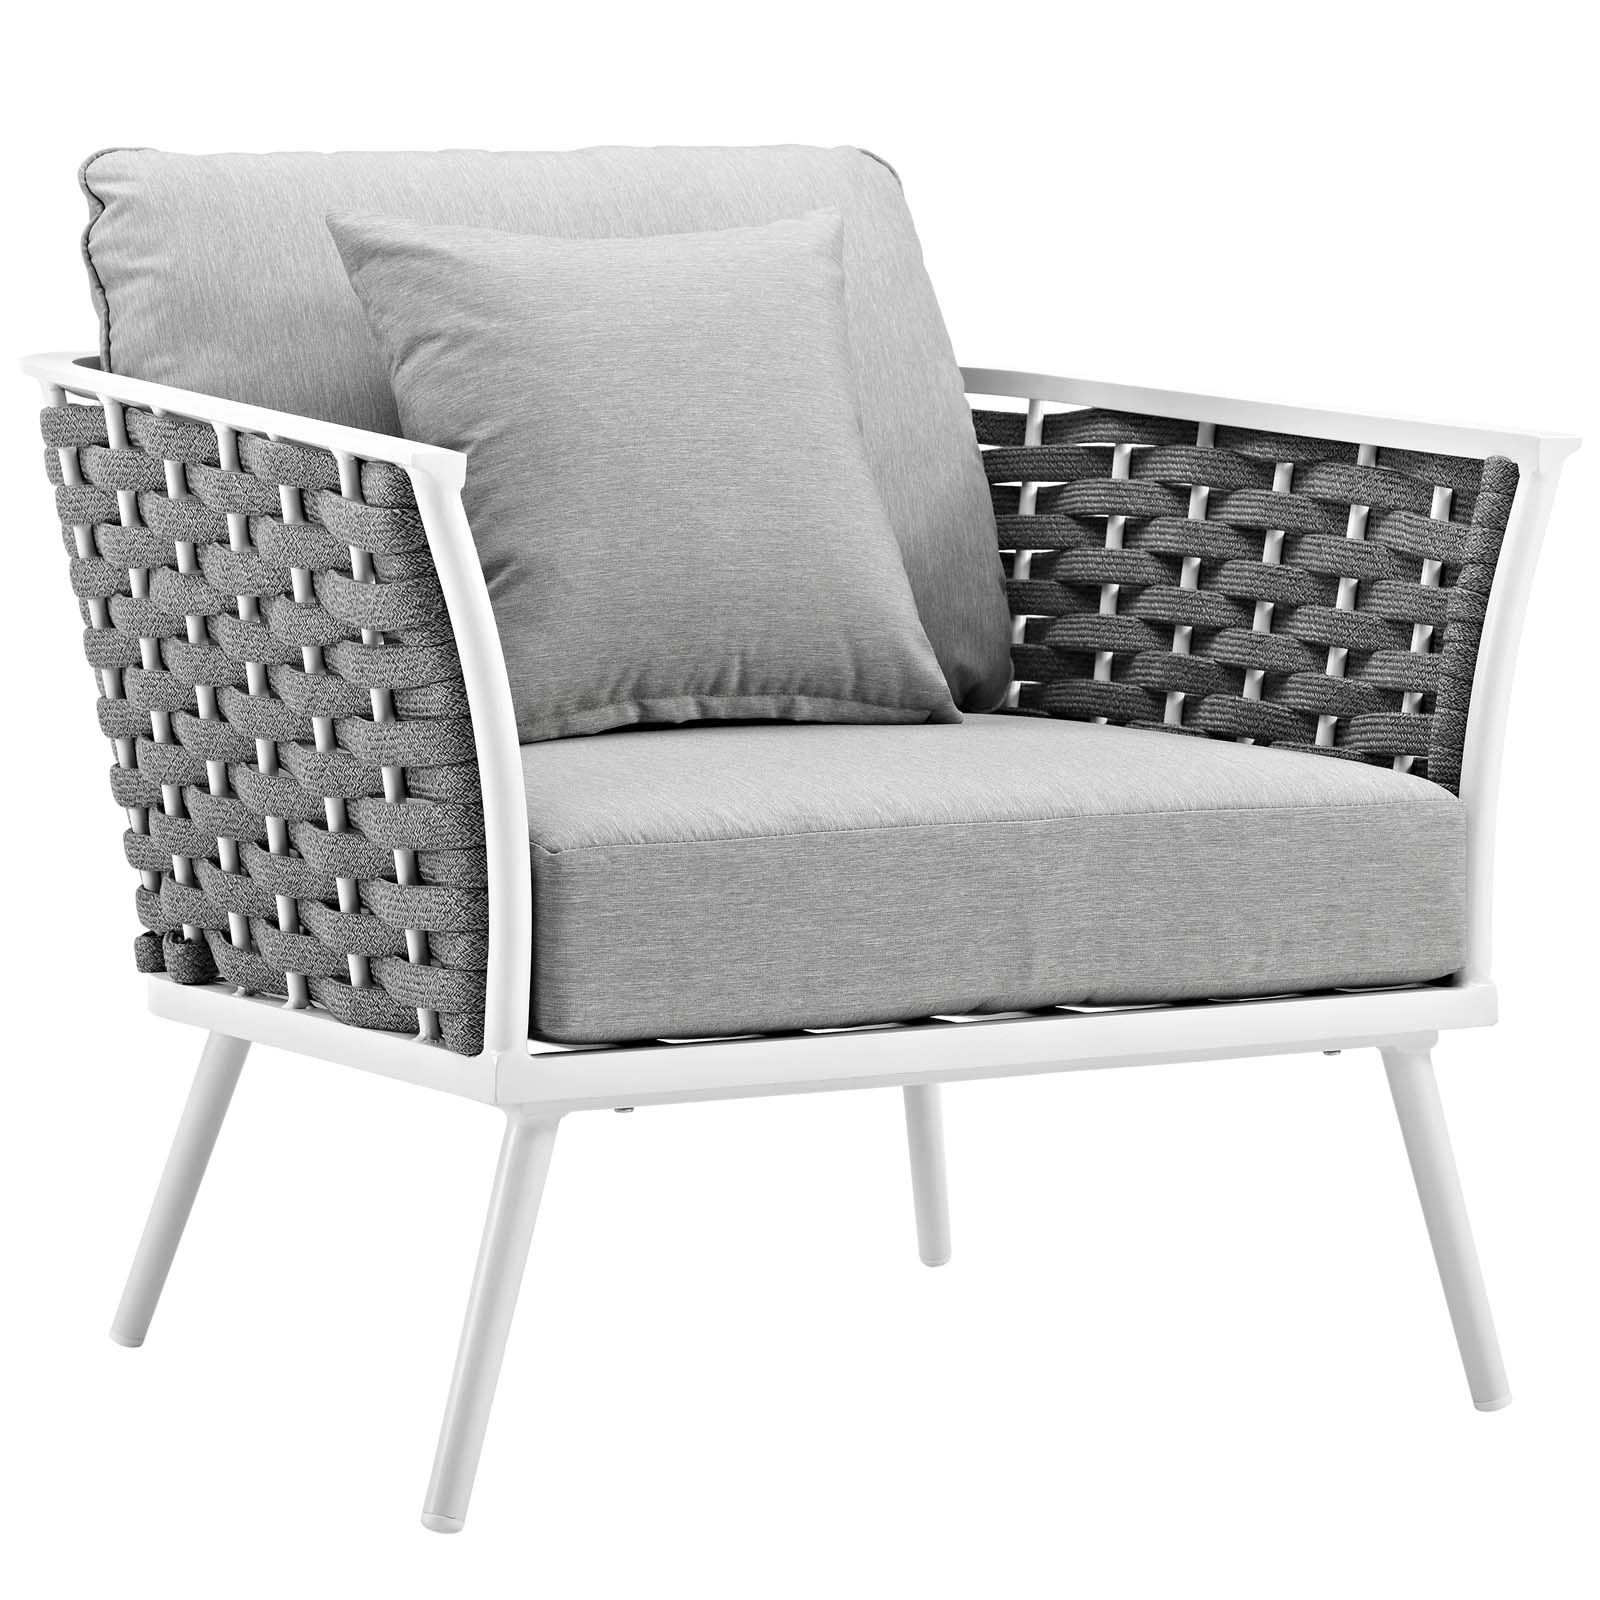 Modern Contemporary Urban Design Outdoor Patio Balcony Garden Furniture Lounge Chair and Sofa Set, Fabric Aluminium, White Grey Gray - image 3 of 8